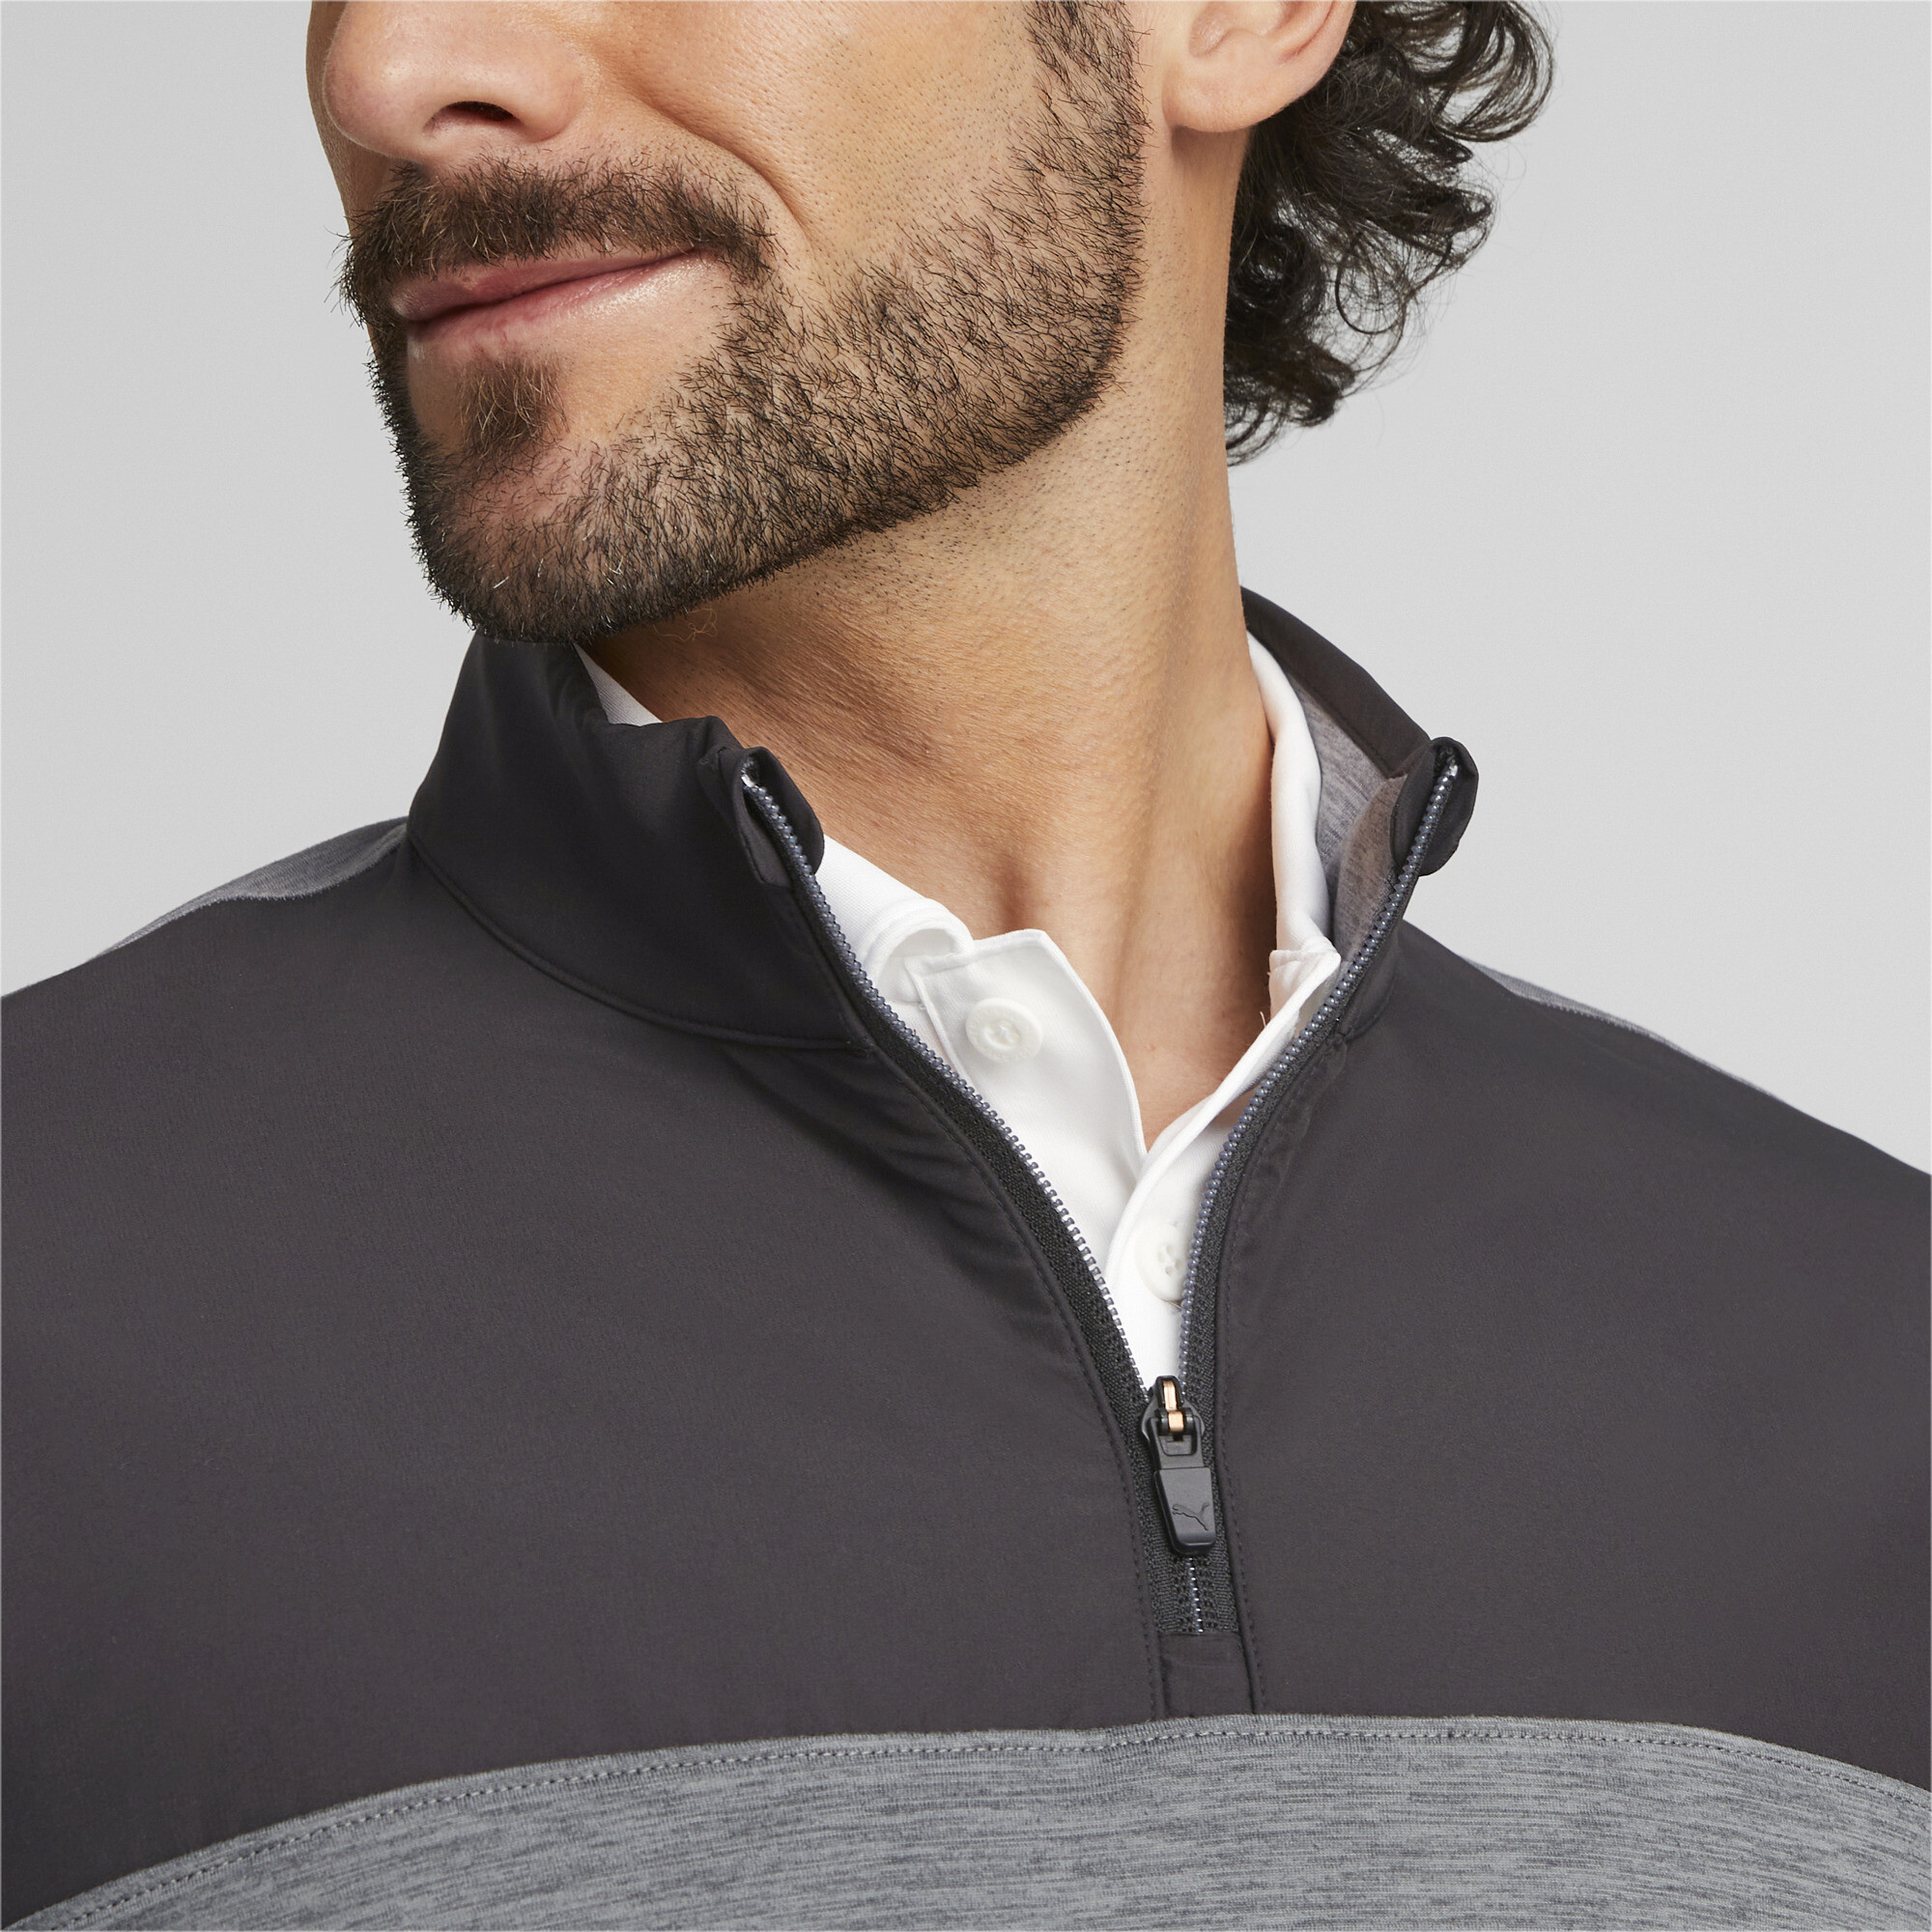 Men's Puma Cloudspun Colourblock Quarter-Zip Golf Sweatshirt Top, Black Top, Size S Top, Sport